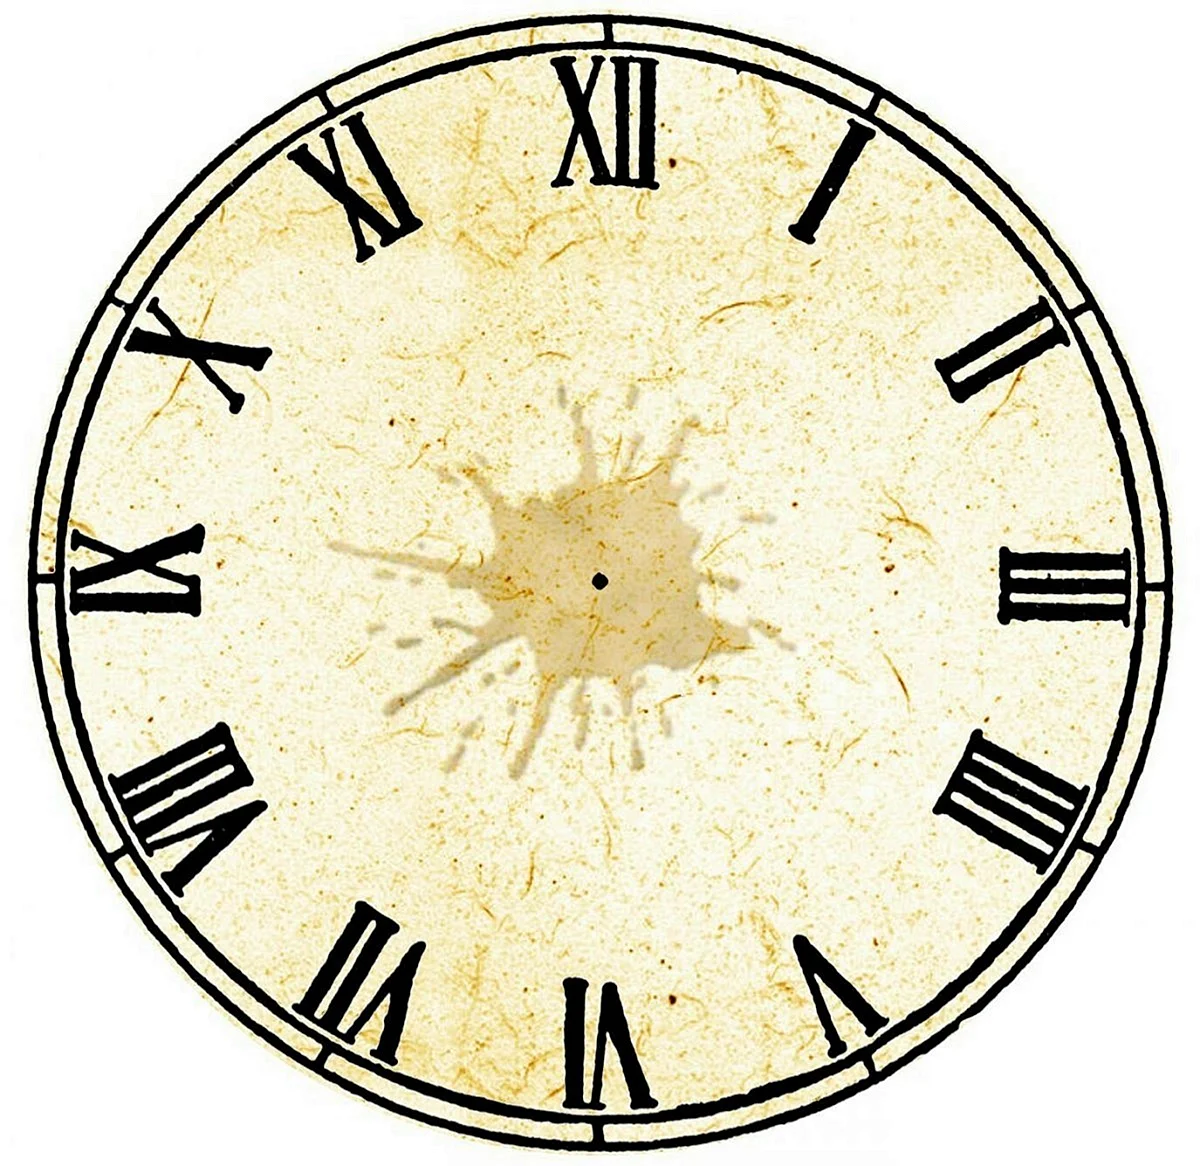 Изображение циферблата часов